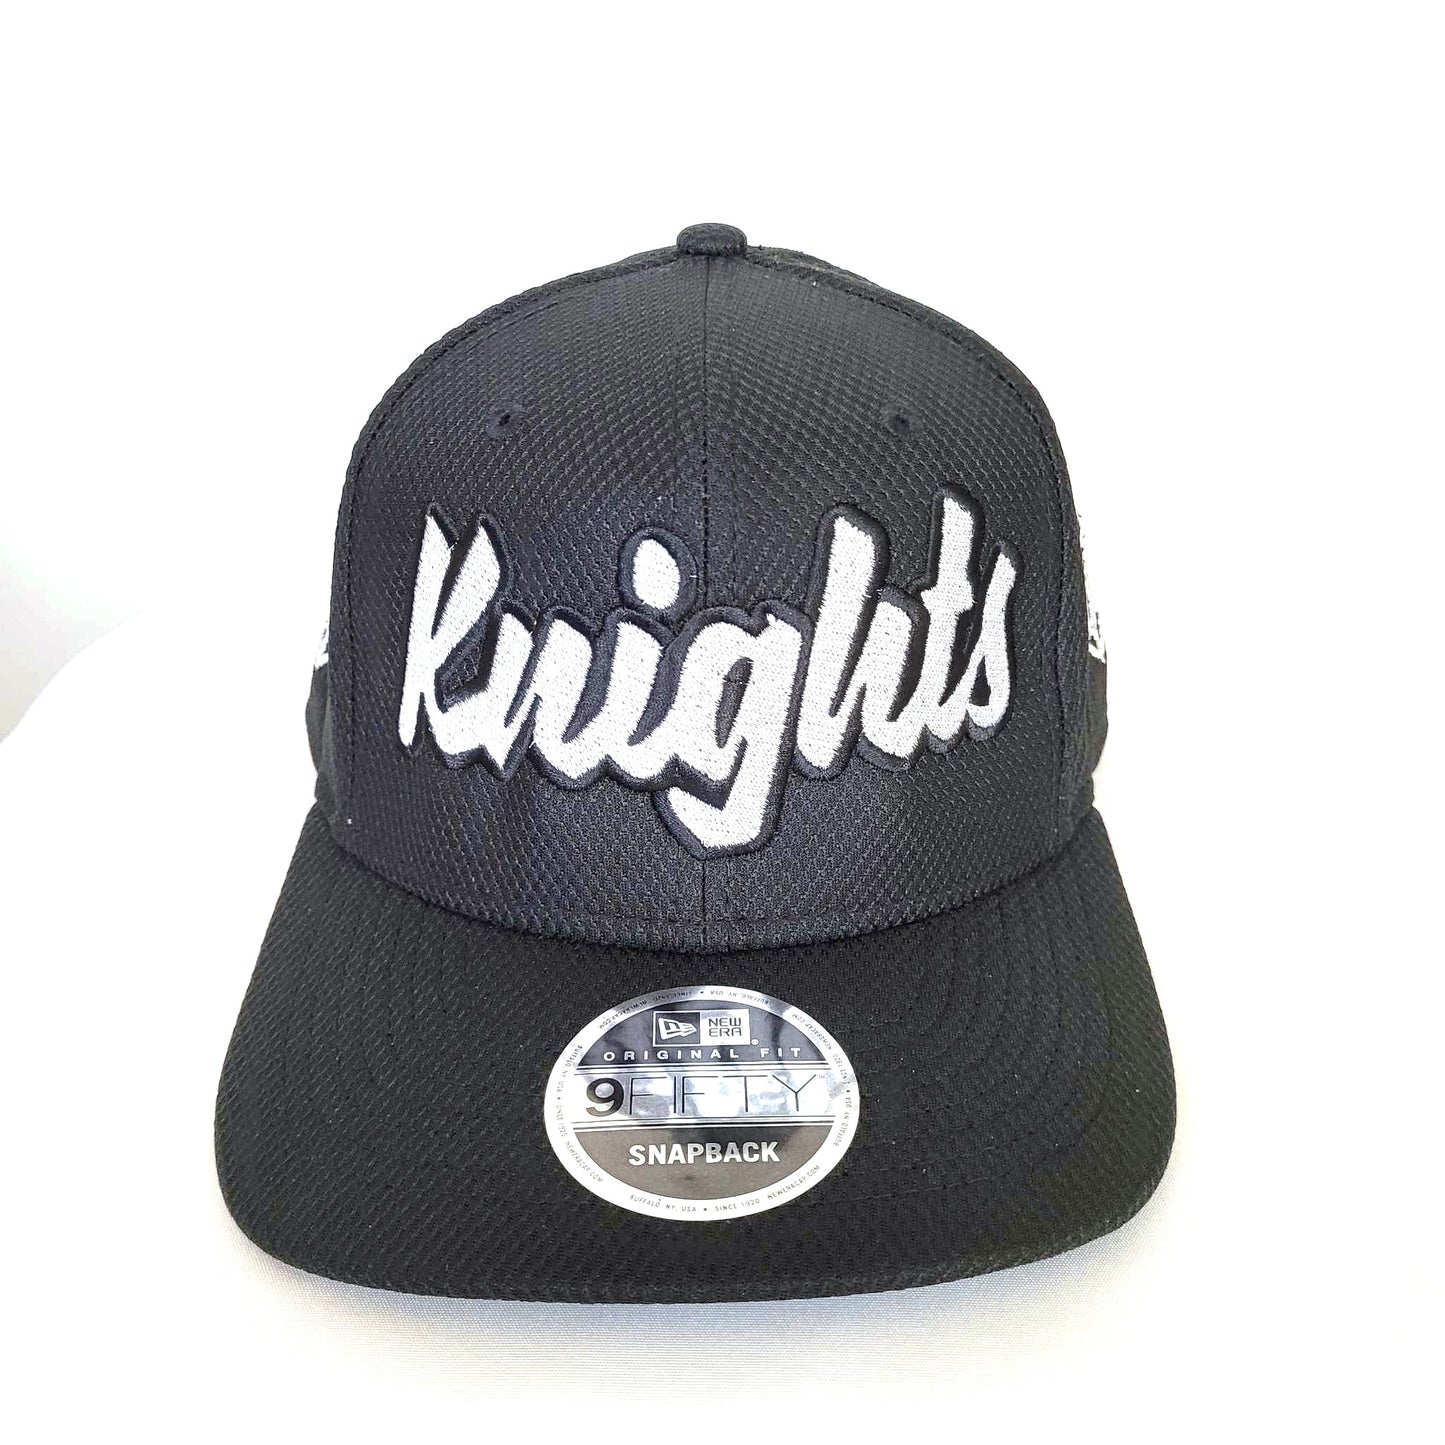 Knights Snapback Cap (Black)